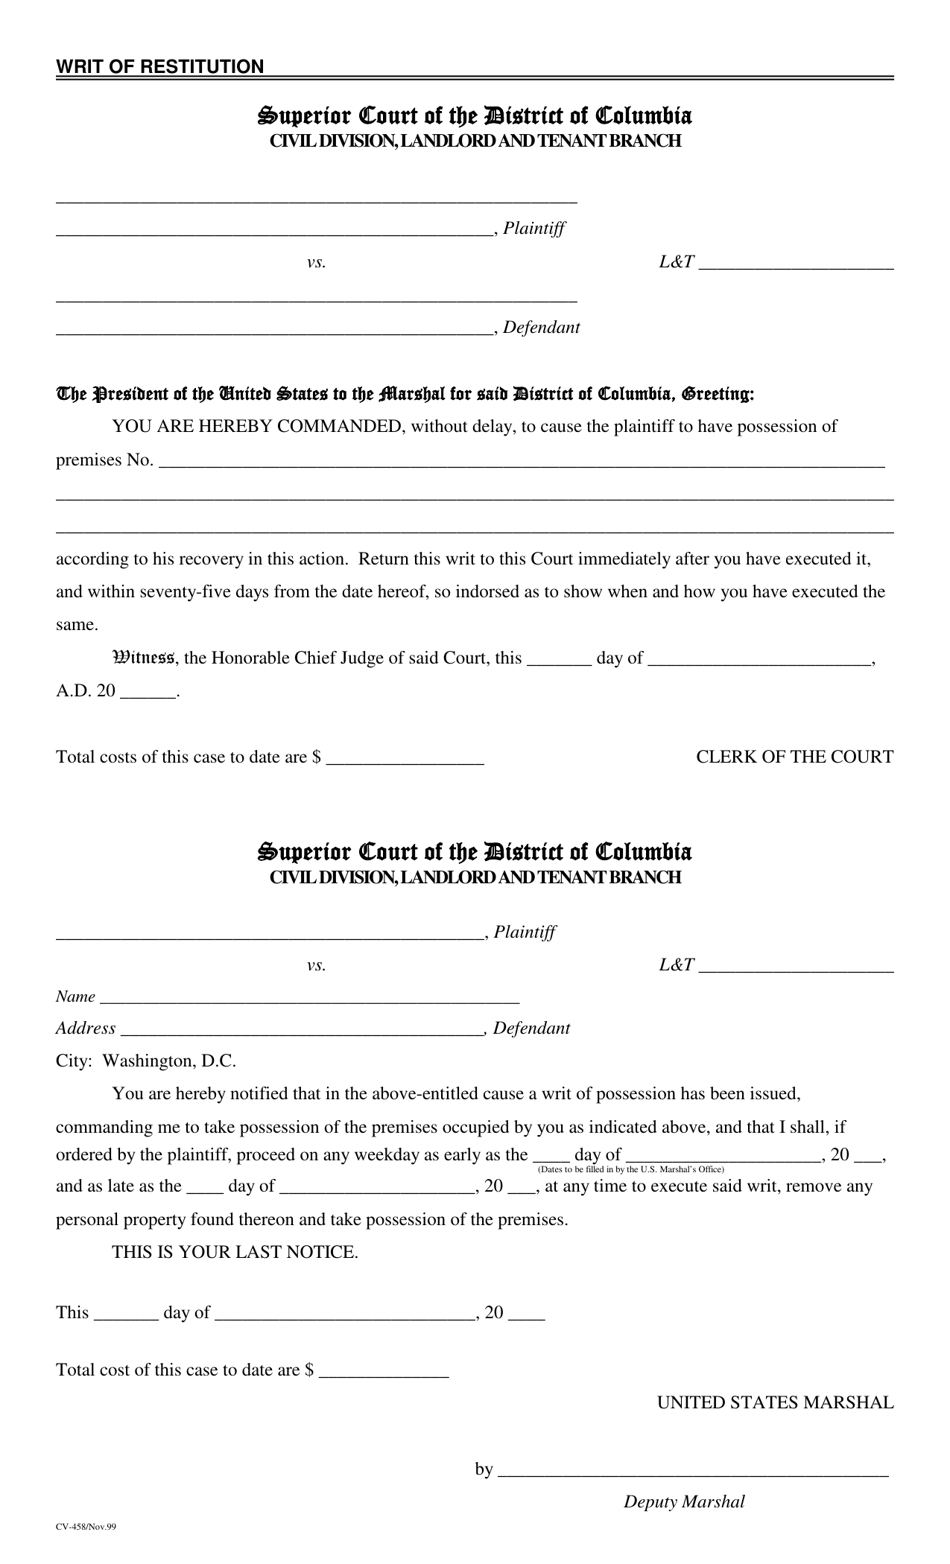 Form CV-458 Writ of Restitution - Washington, D.C., Page 1